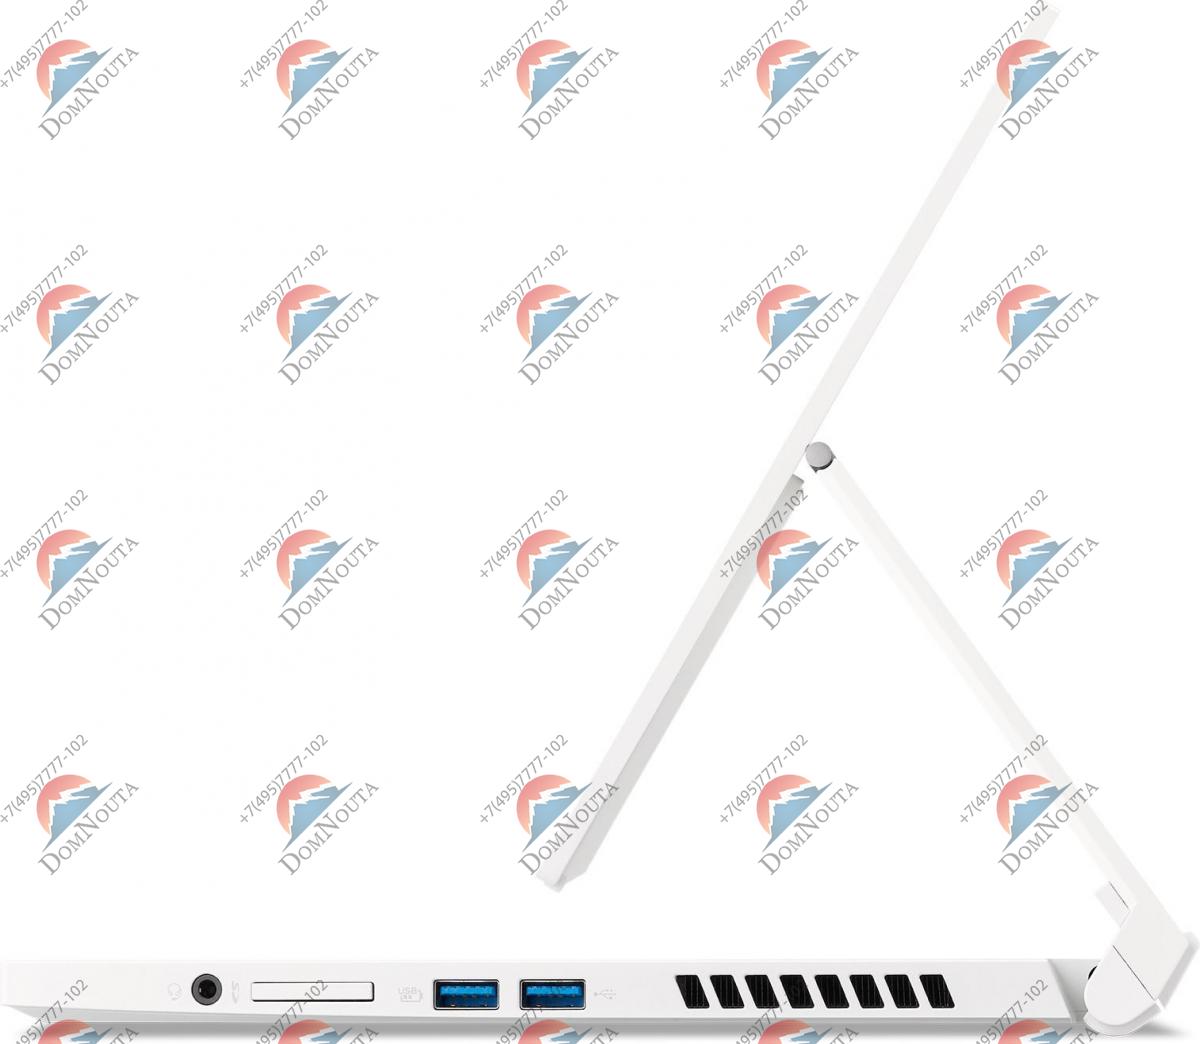 Ноутбук Acer ConceptD 3 CC314